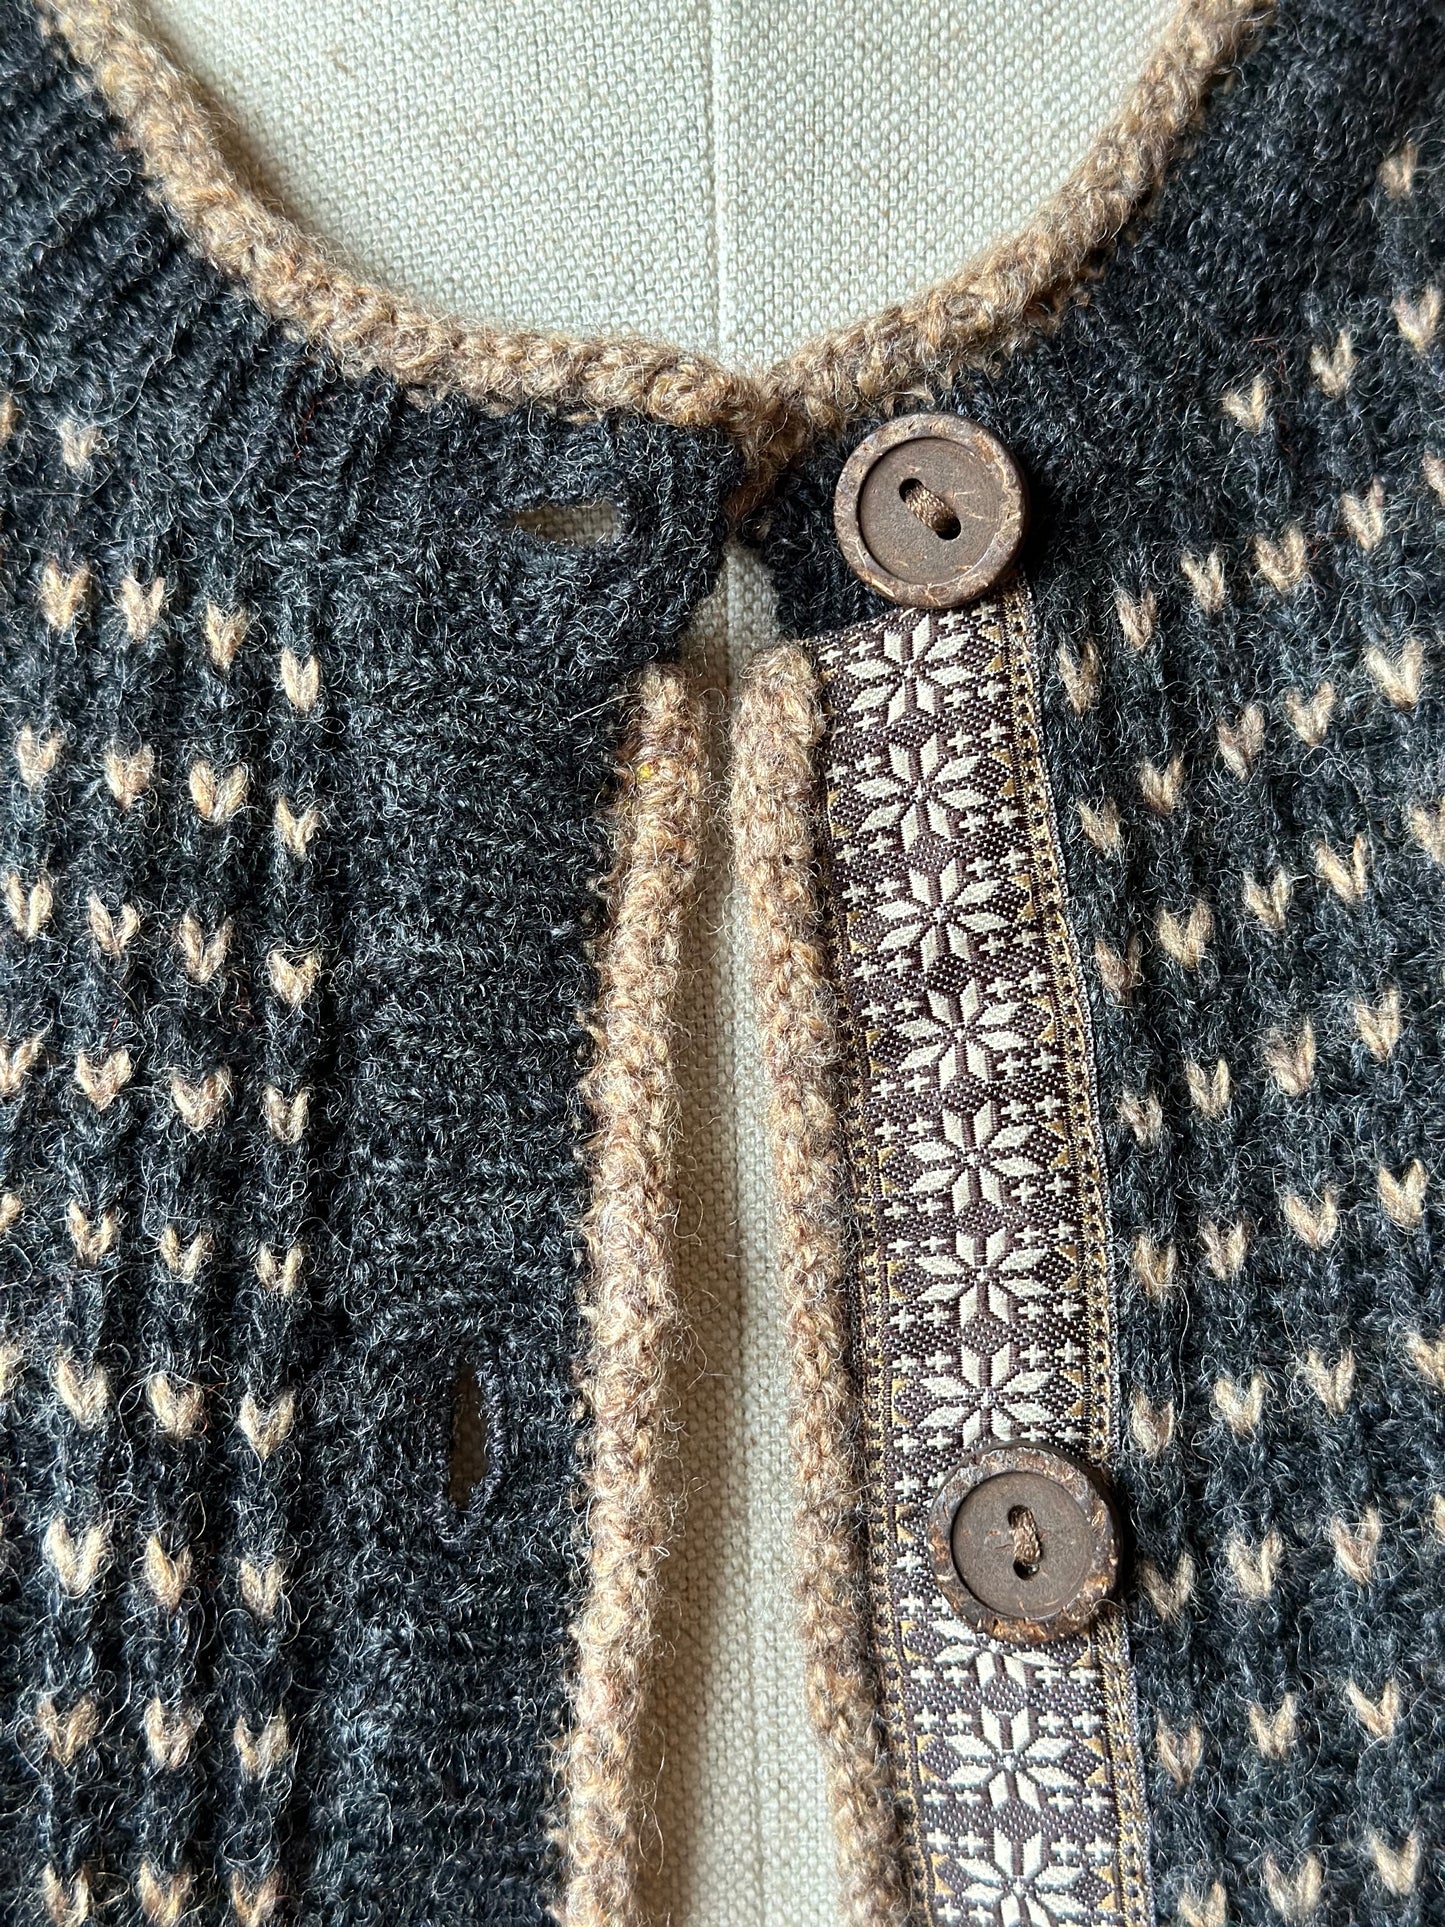 Vintage Woolrich Woolen Cardigan